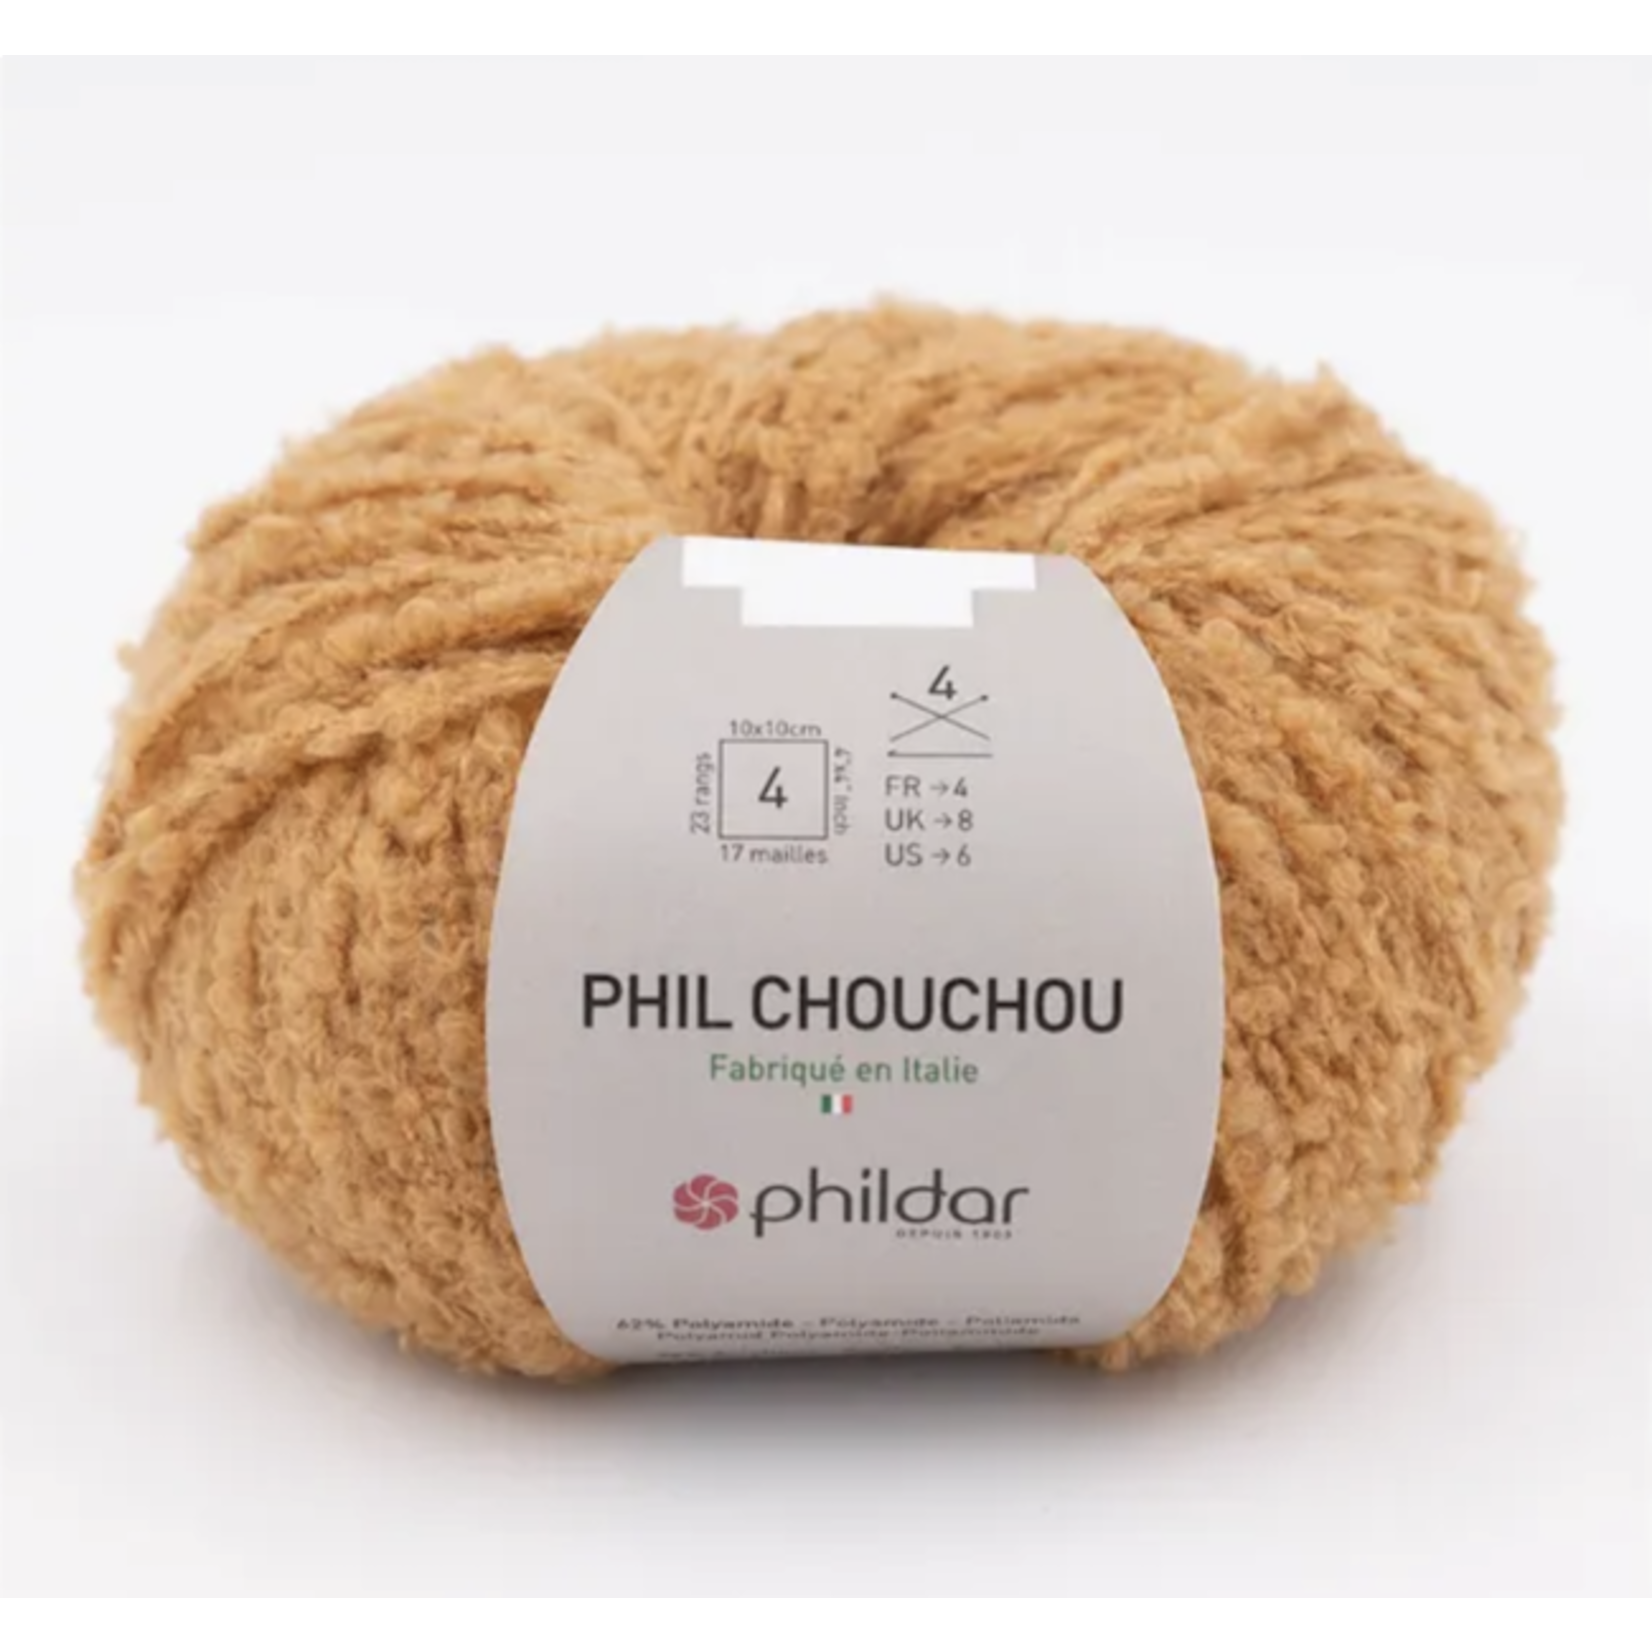 Phildar Phil Chouchou Erable